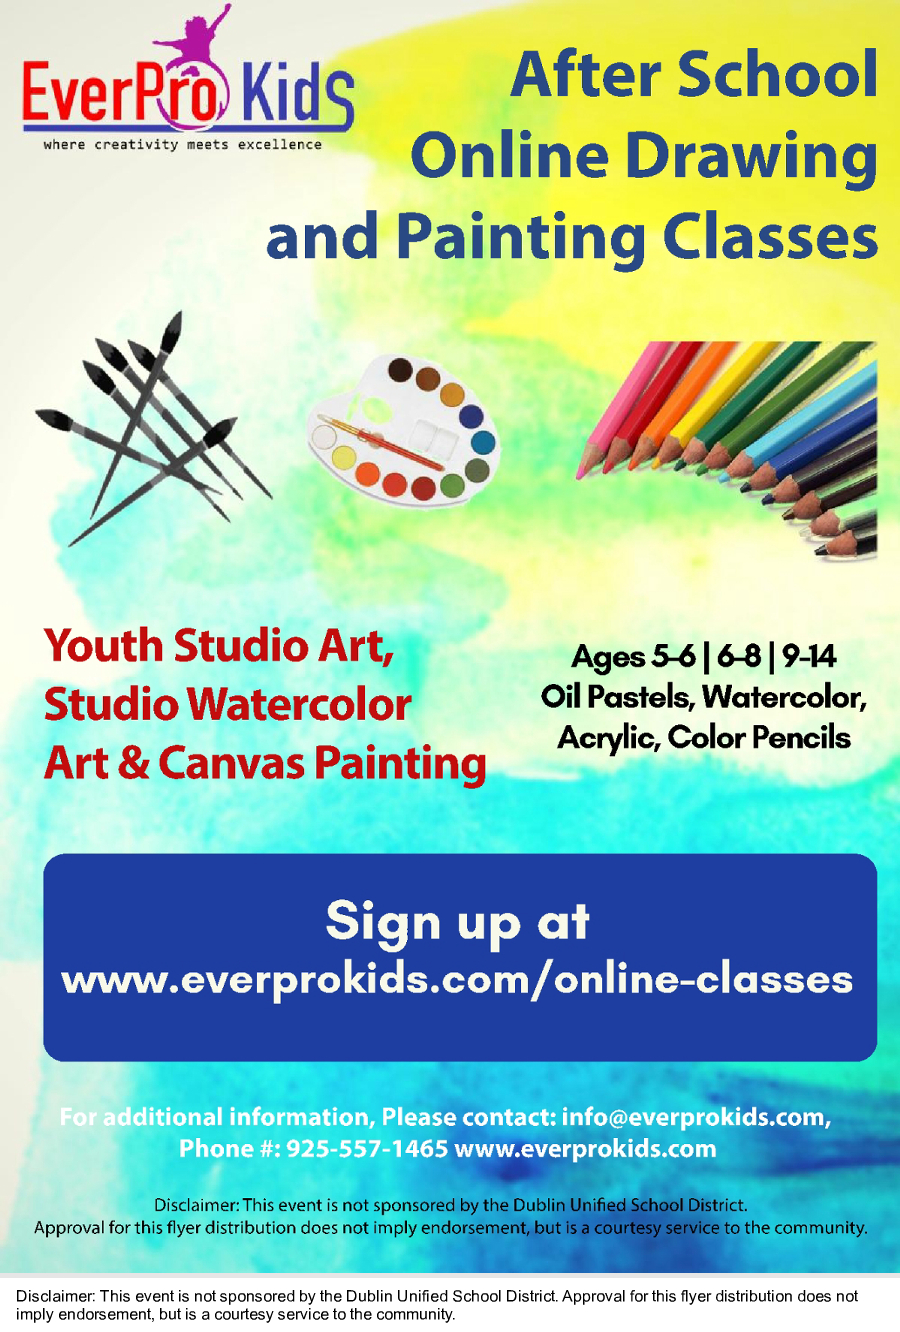 EverPro Kids Online Afterschool Art Classes